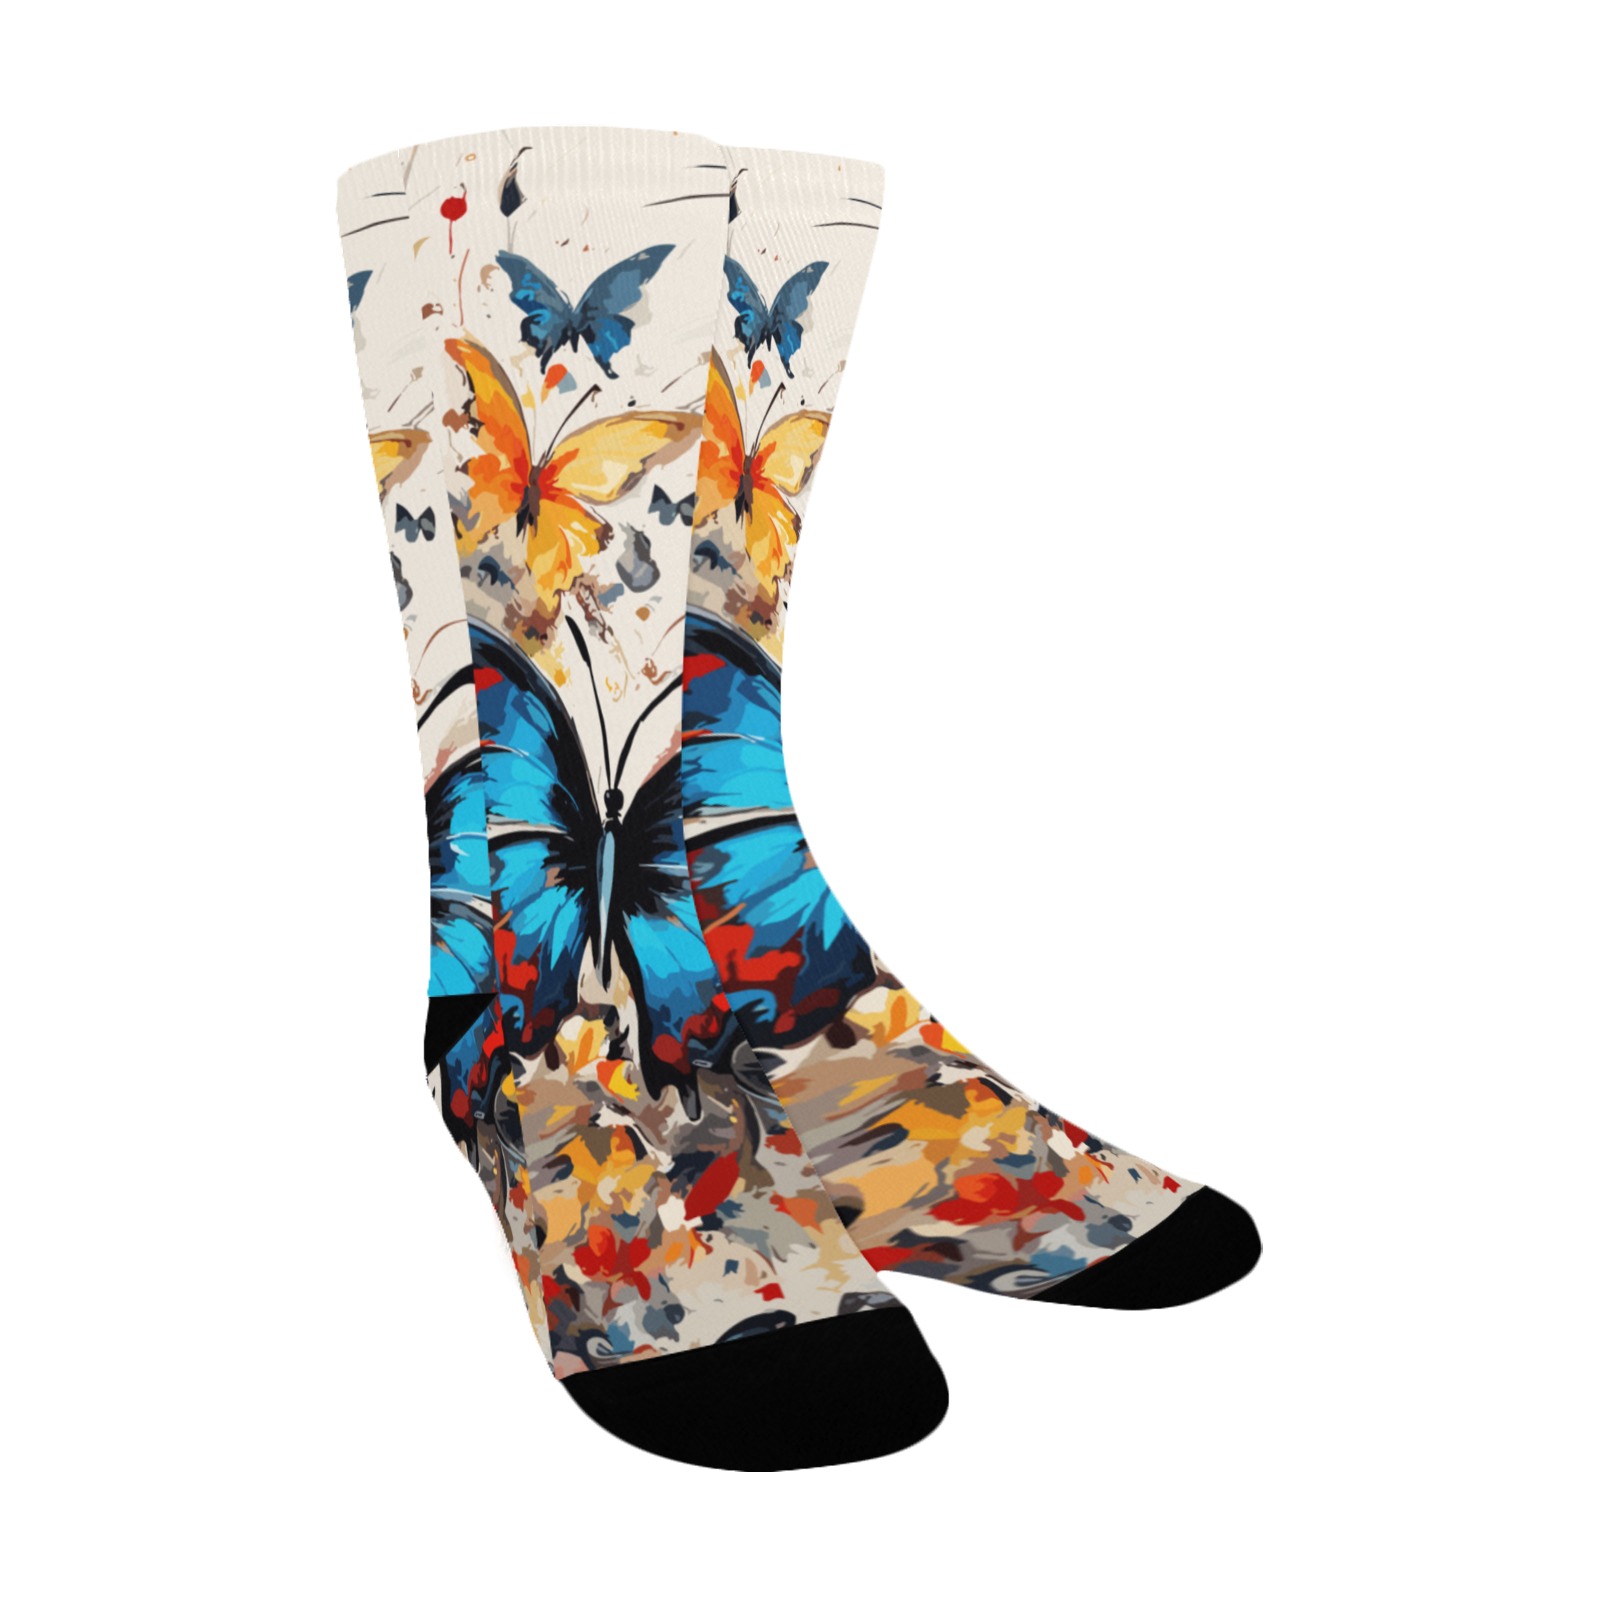 Fantastic blue, red, yellow butterflies art Custom Socks for Women